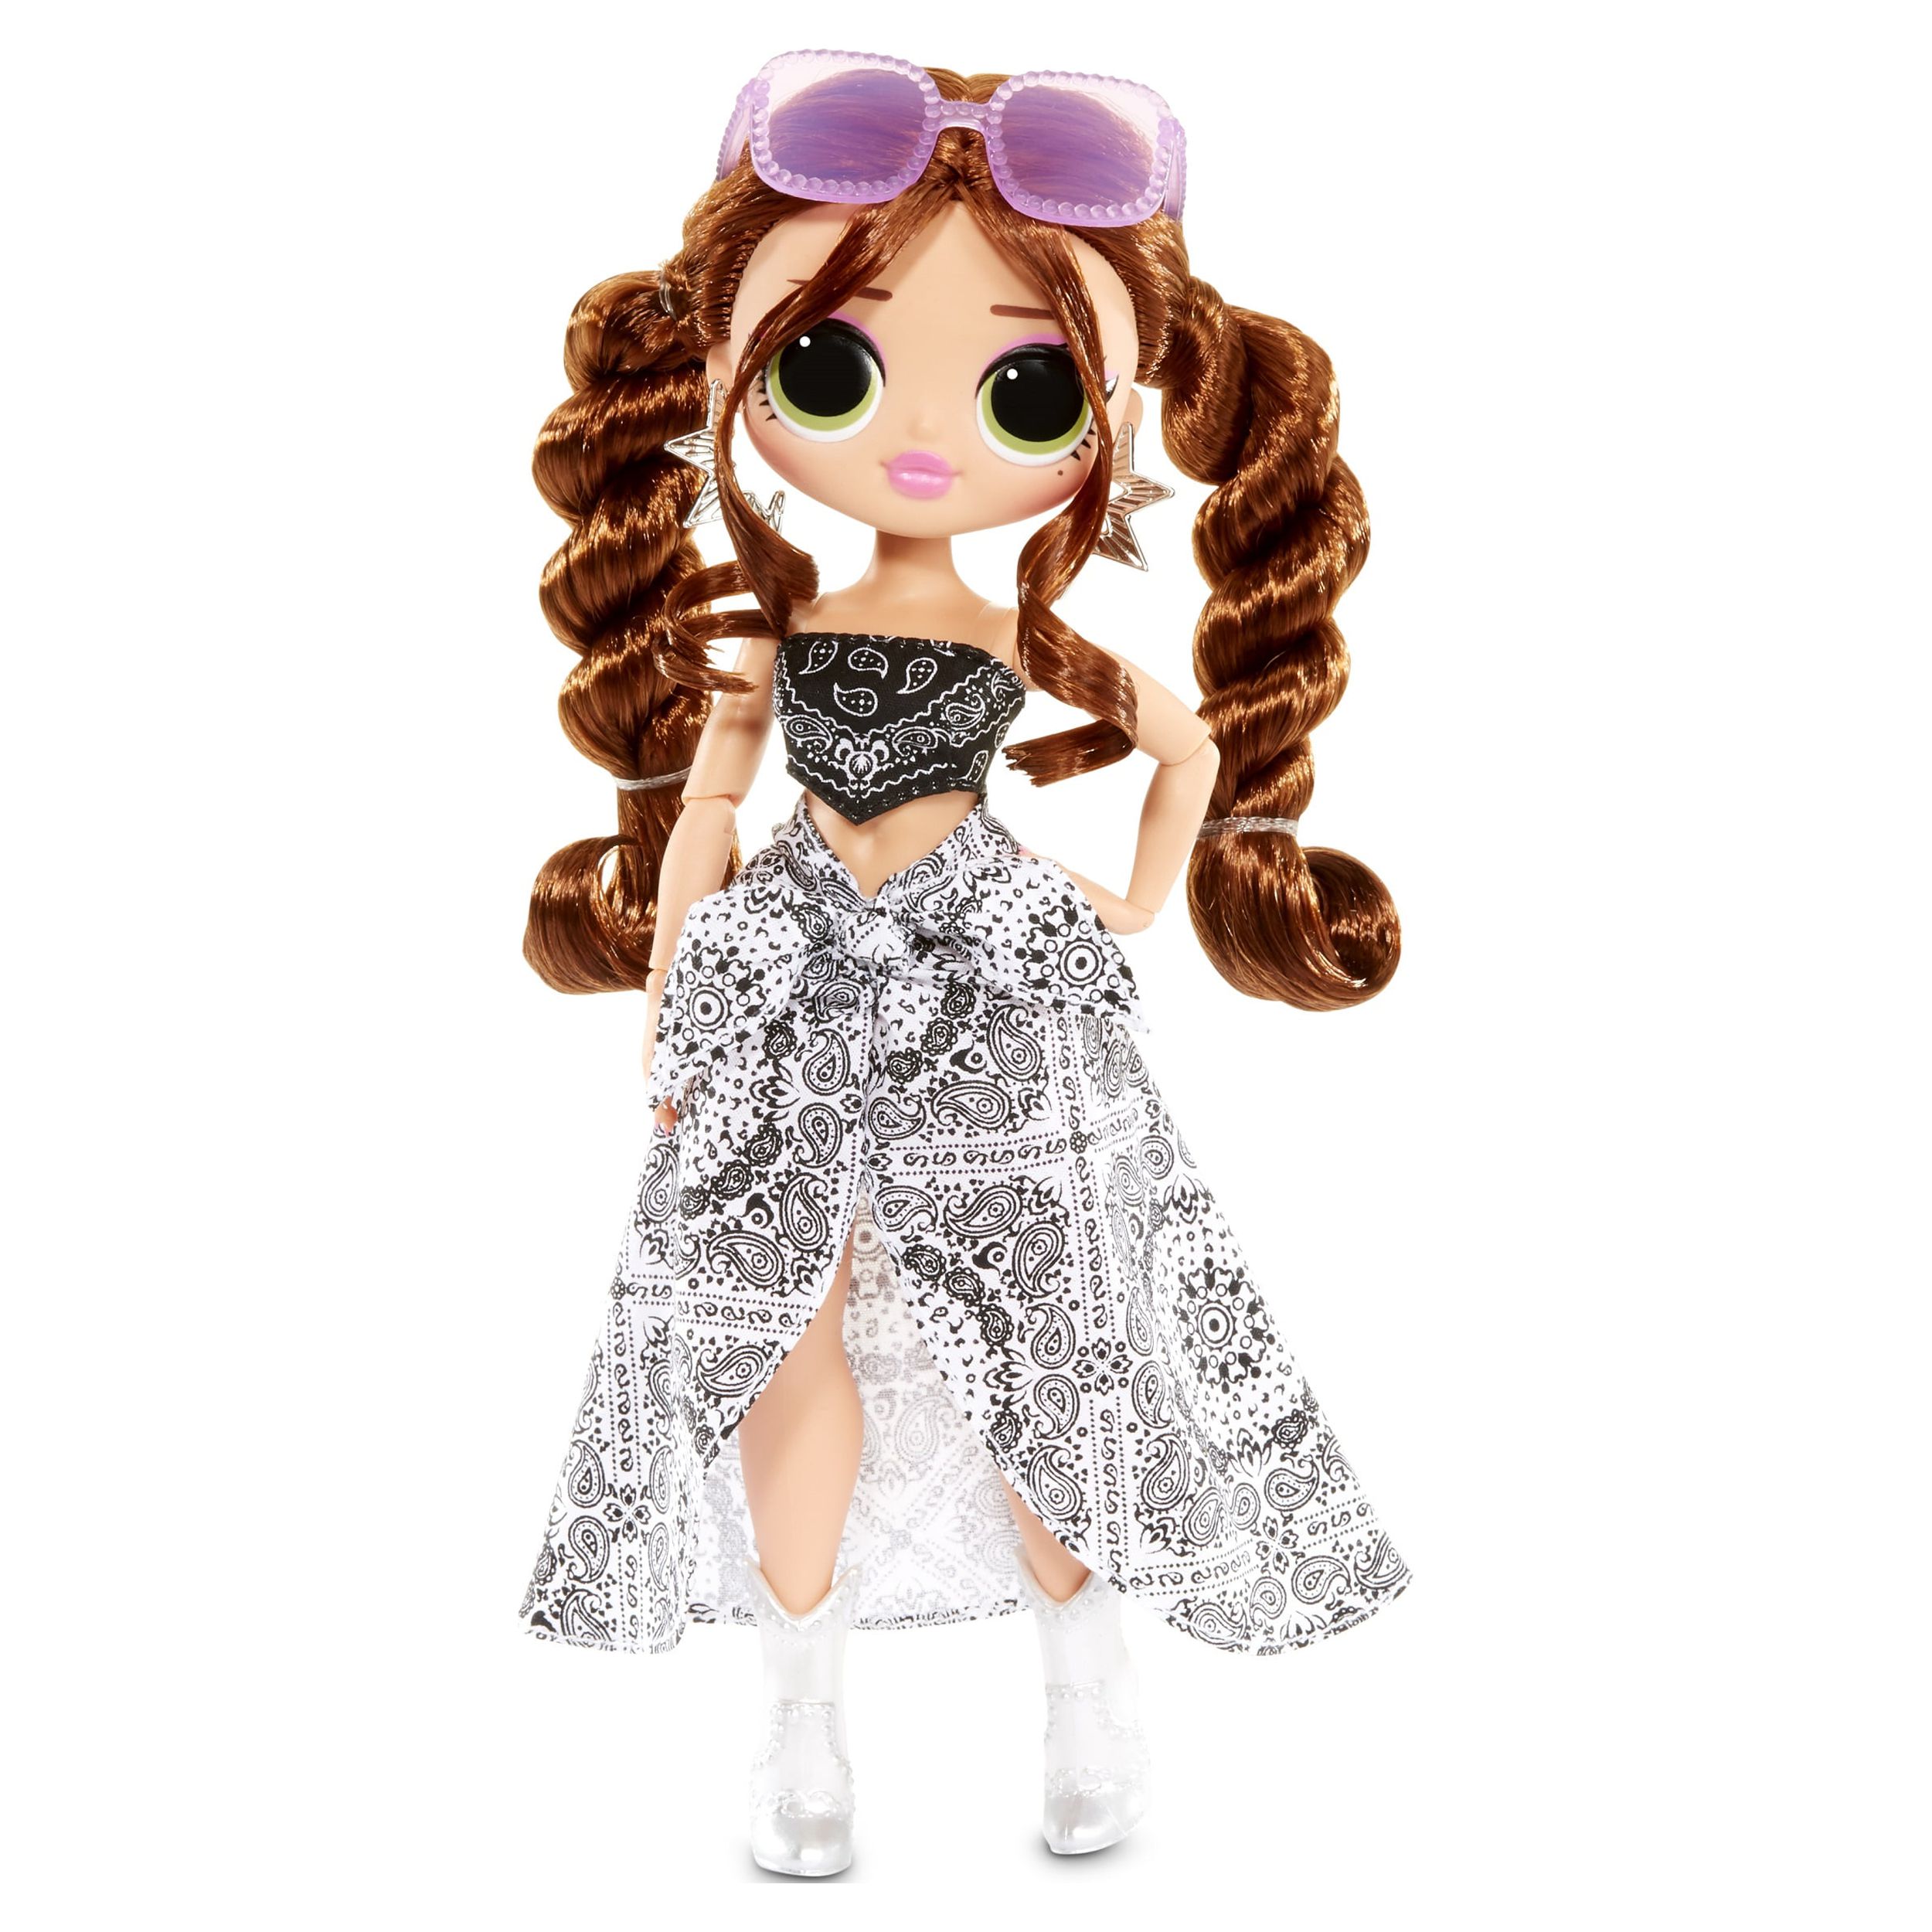 LOL Surprise! OMG Remix Lonestar Fashion Doll 25 Surprises - image 5 of 8